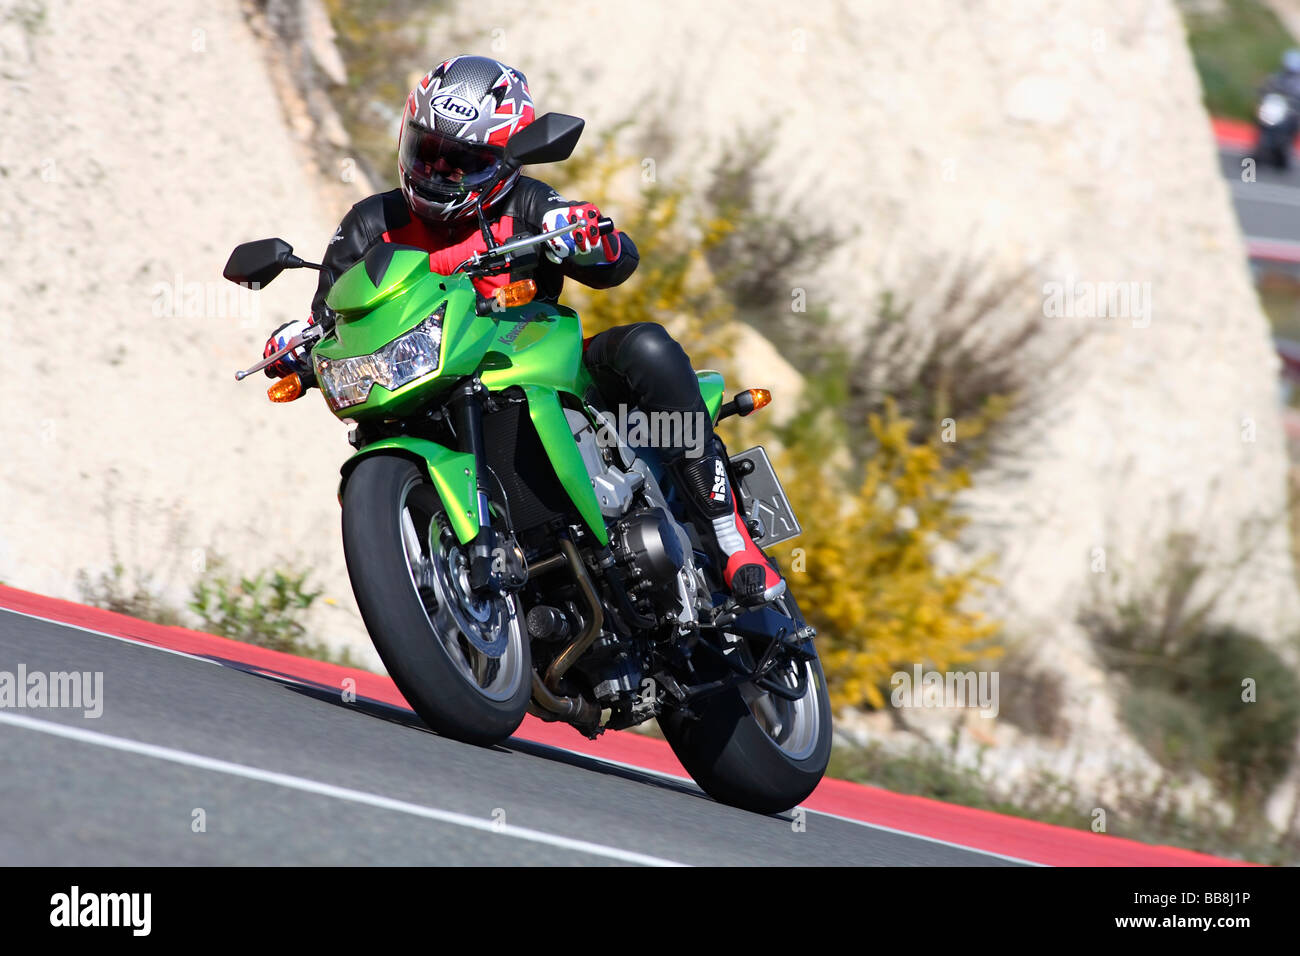 Moto Kawasaki Z750 Photo Stock - Alamy